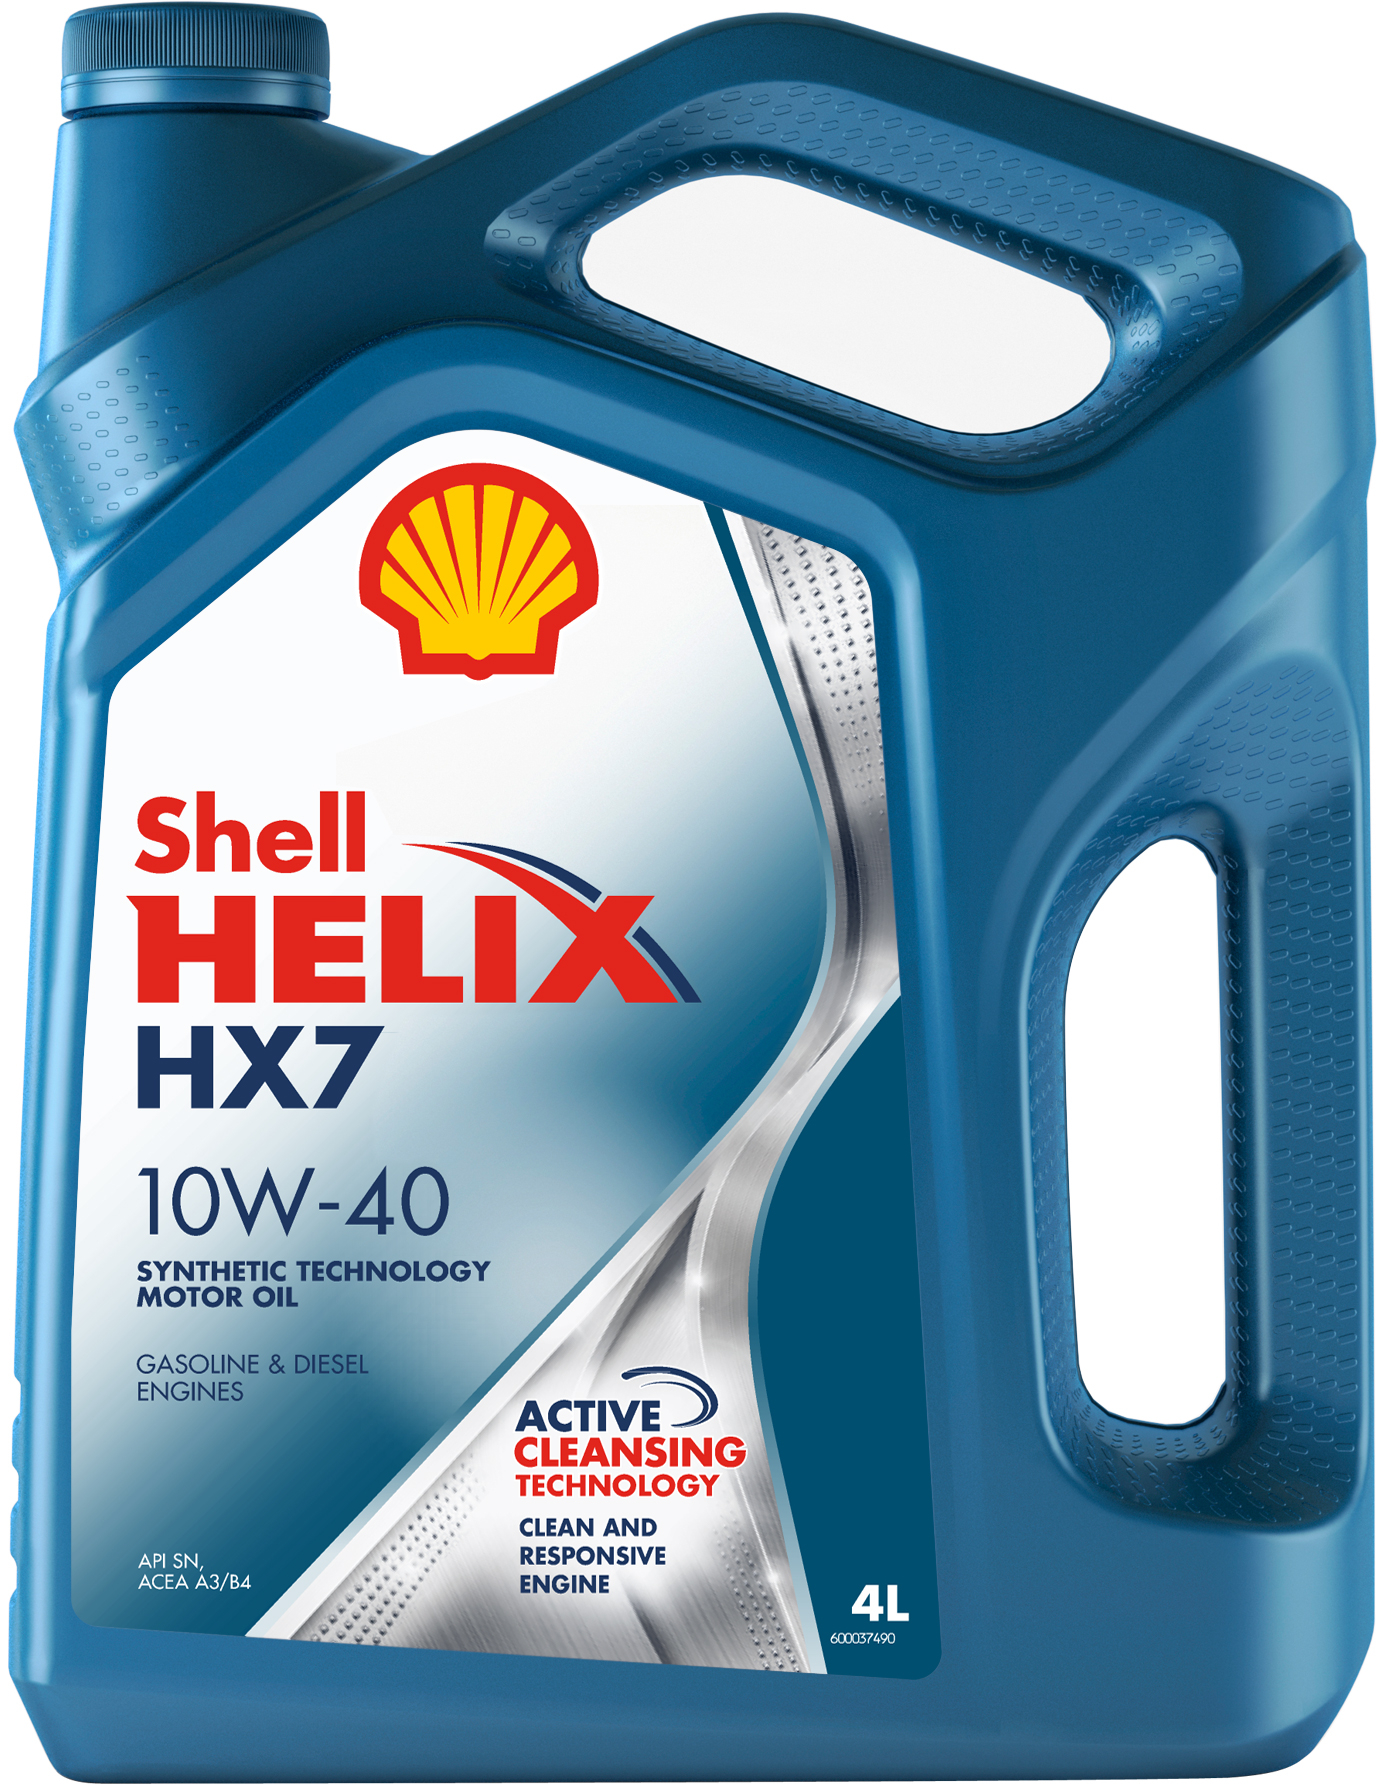 Моторное масло Shell Helix HX7 10W-40, 550046360, 4л